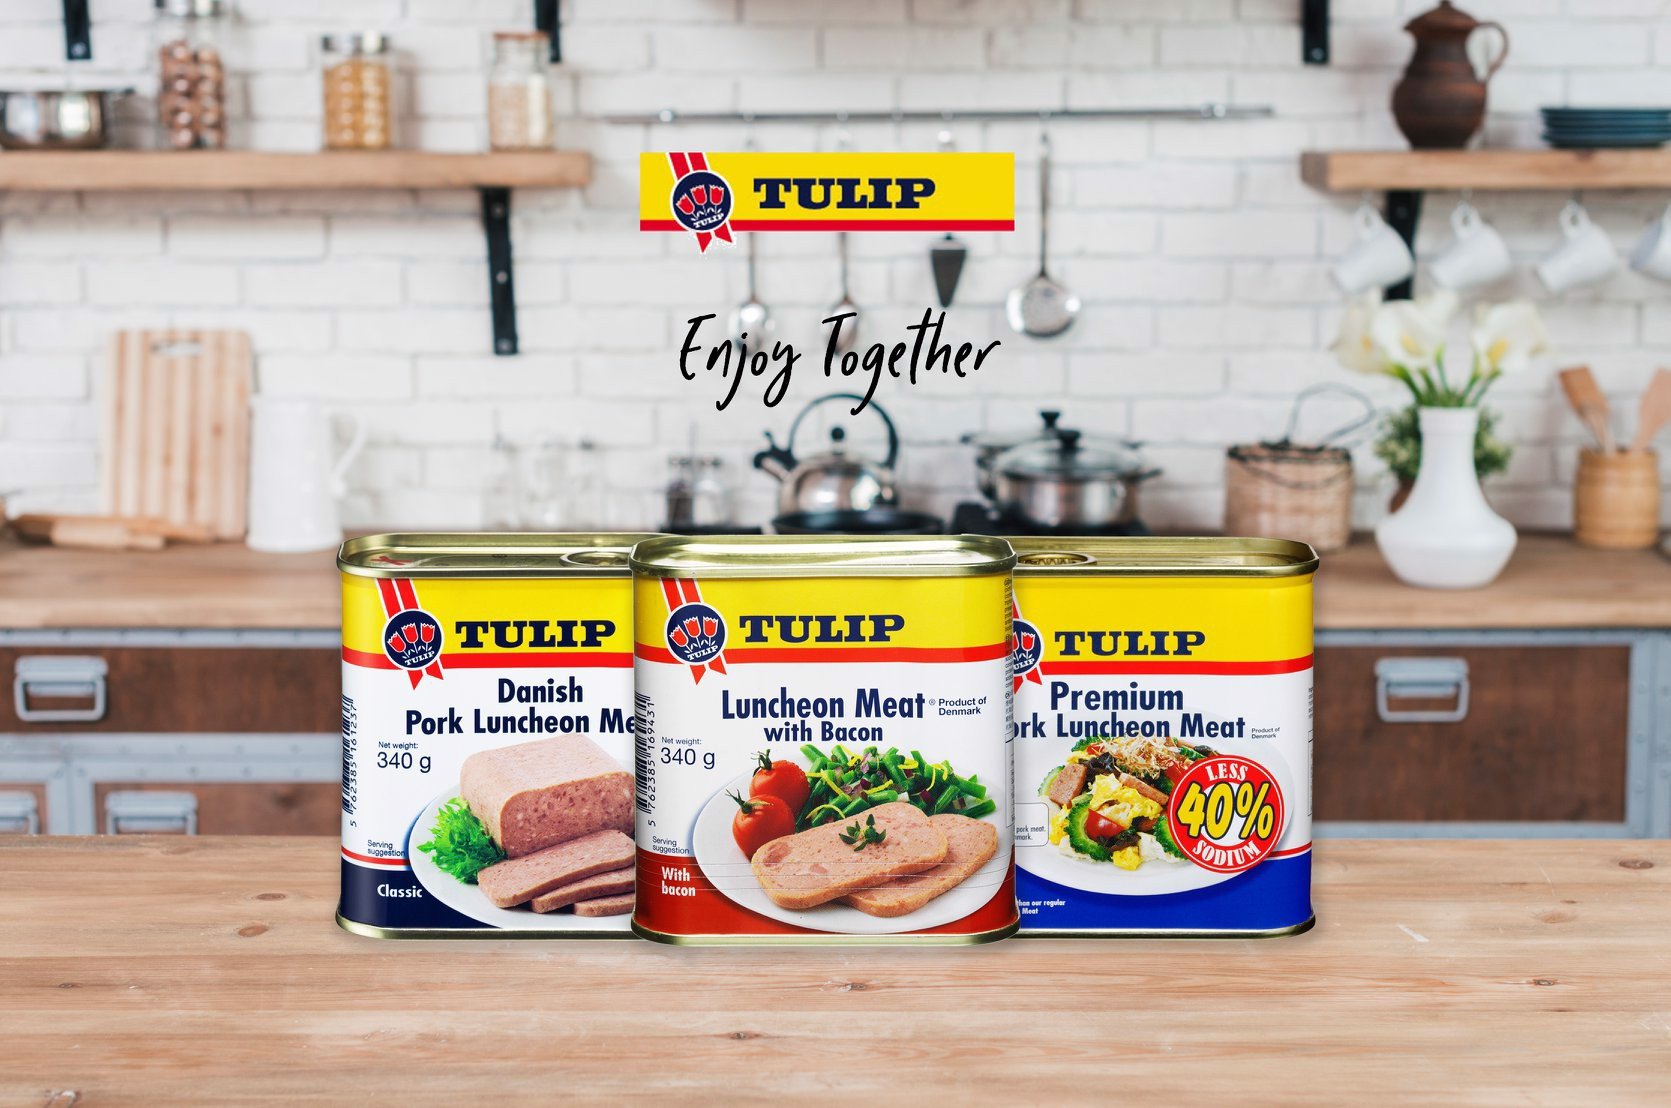 Thịt hộp Tulip Pork Luncheon Meat 40% Less Sodium 340g